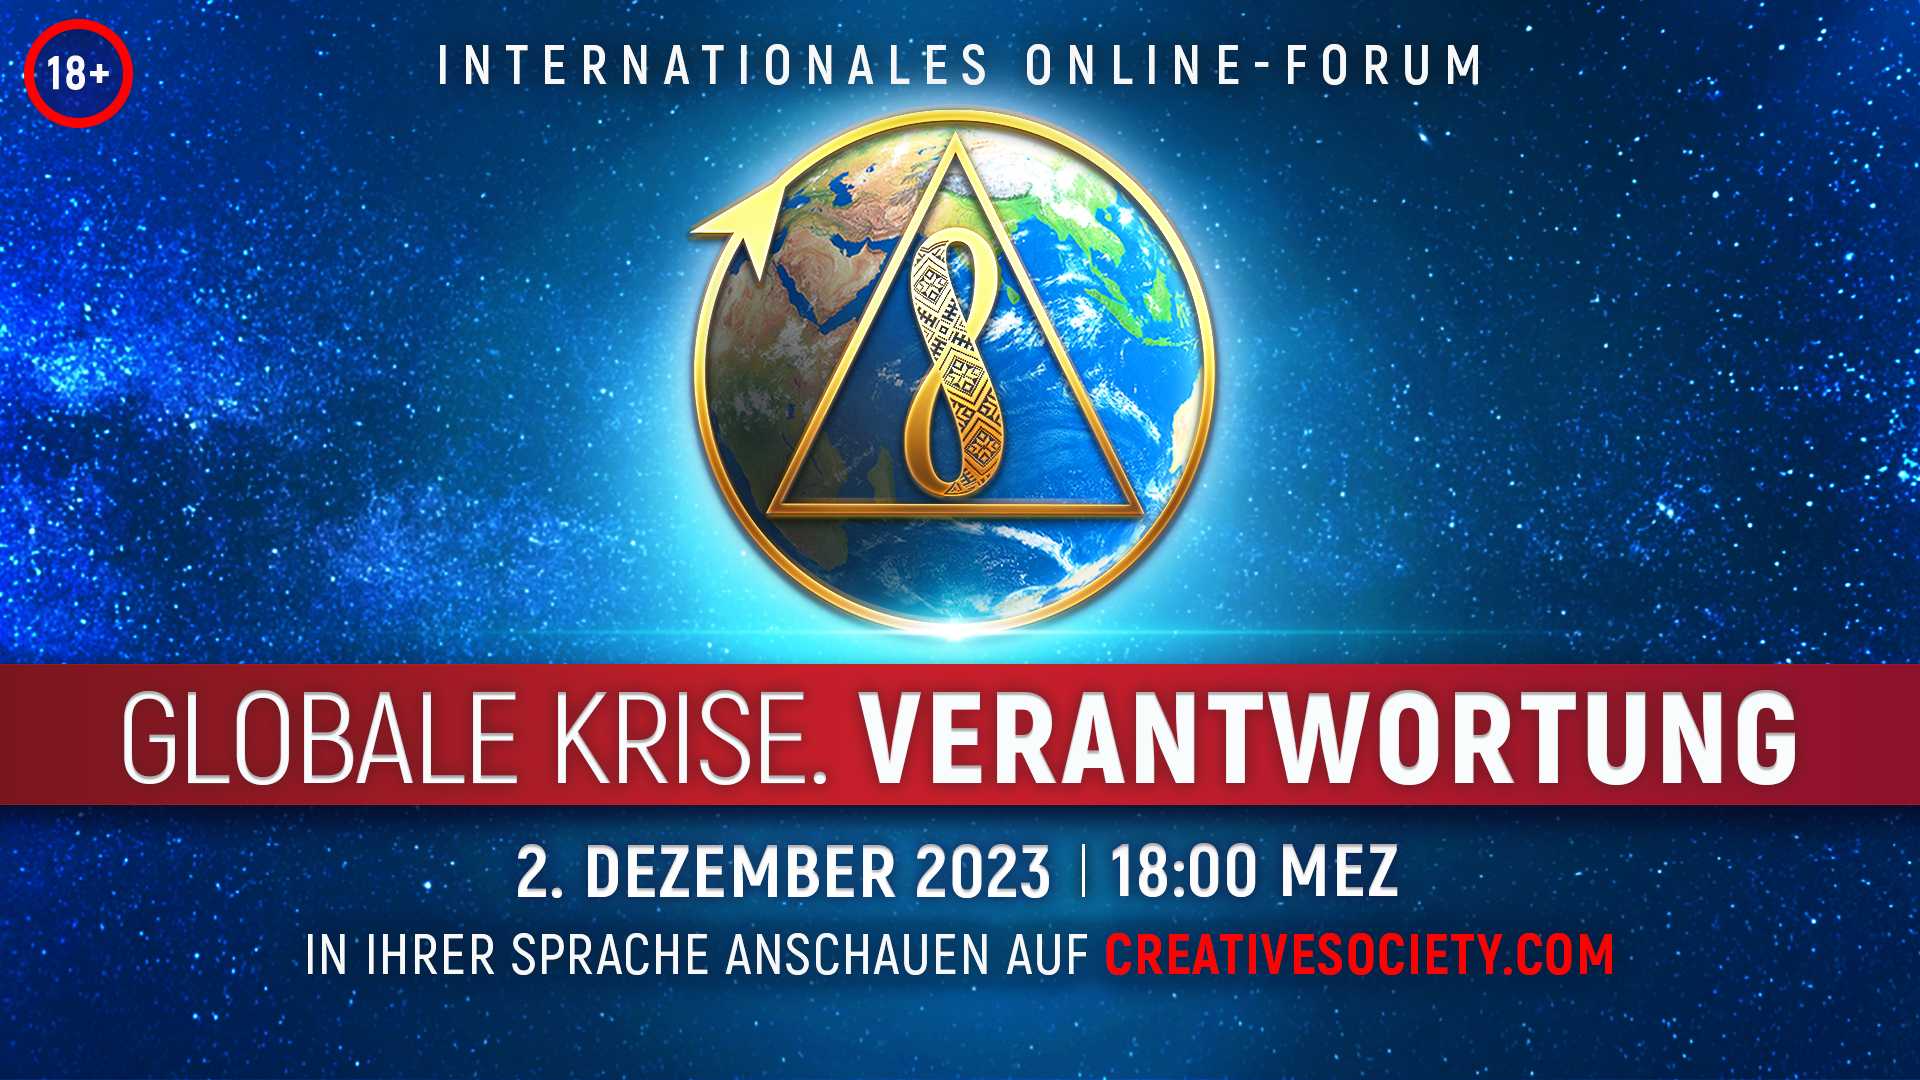 Globale Krise. Verantwortung | Internationales Online-Forum. 2. Dezember 2023.